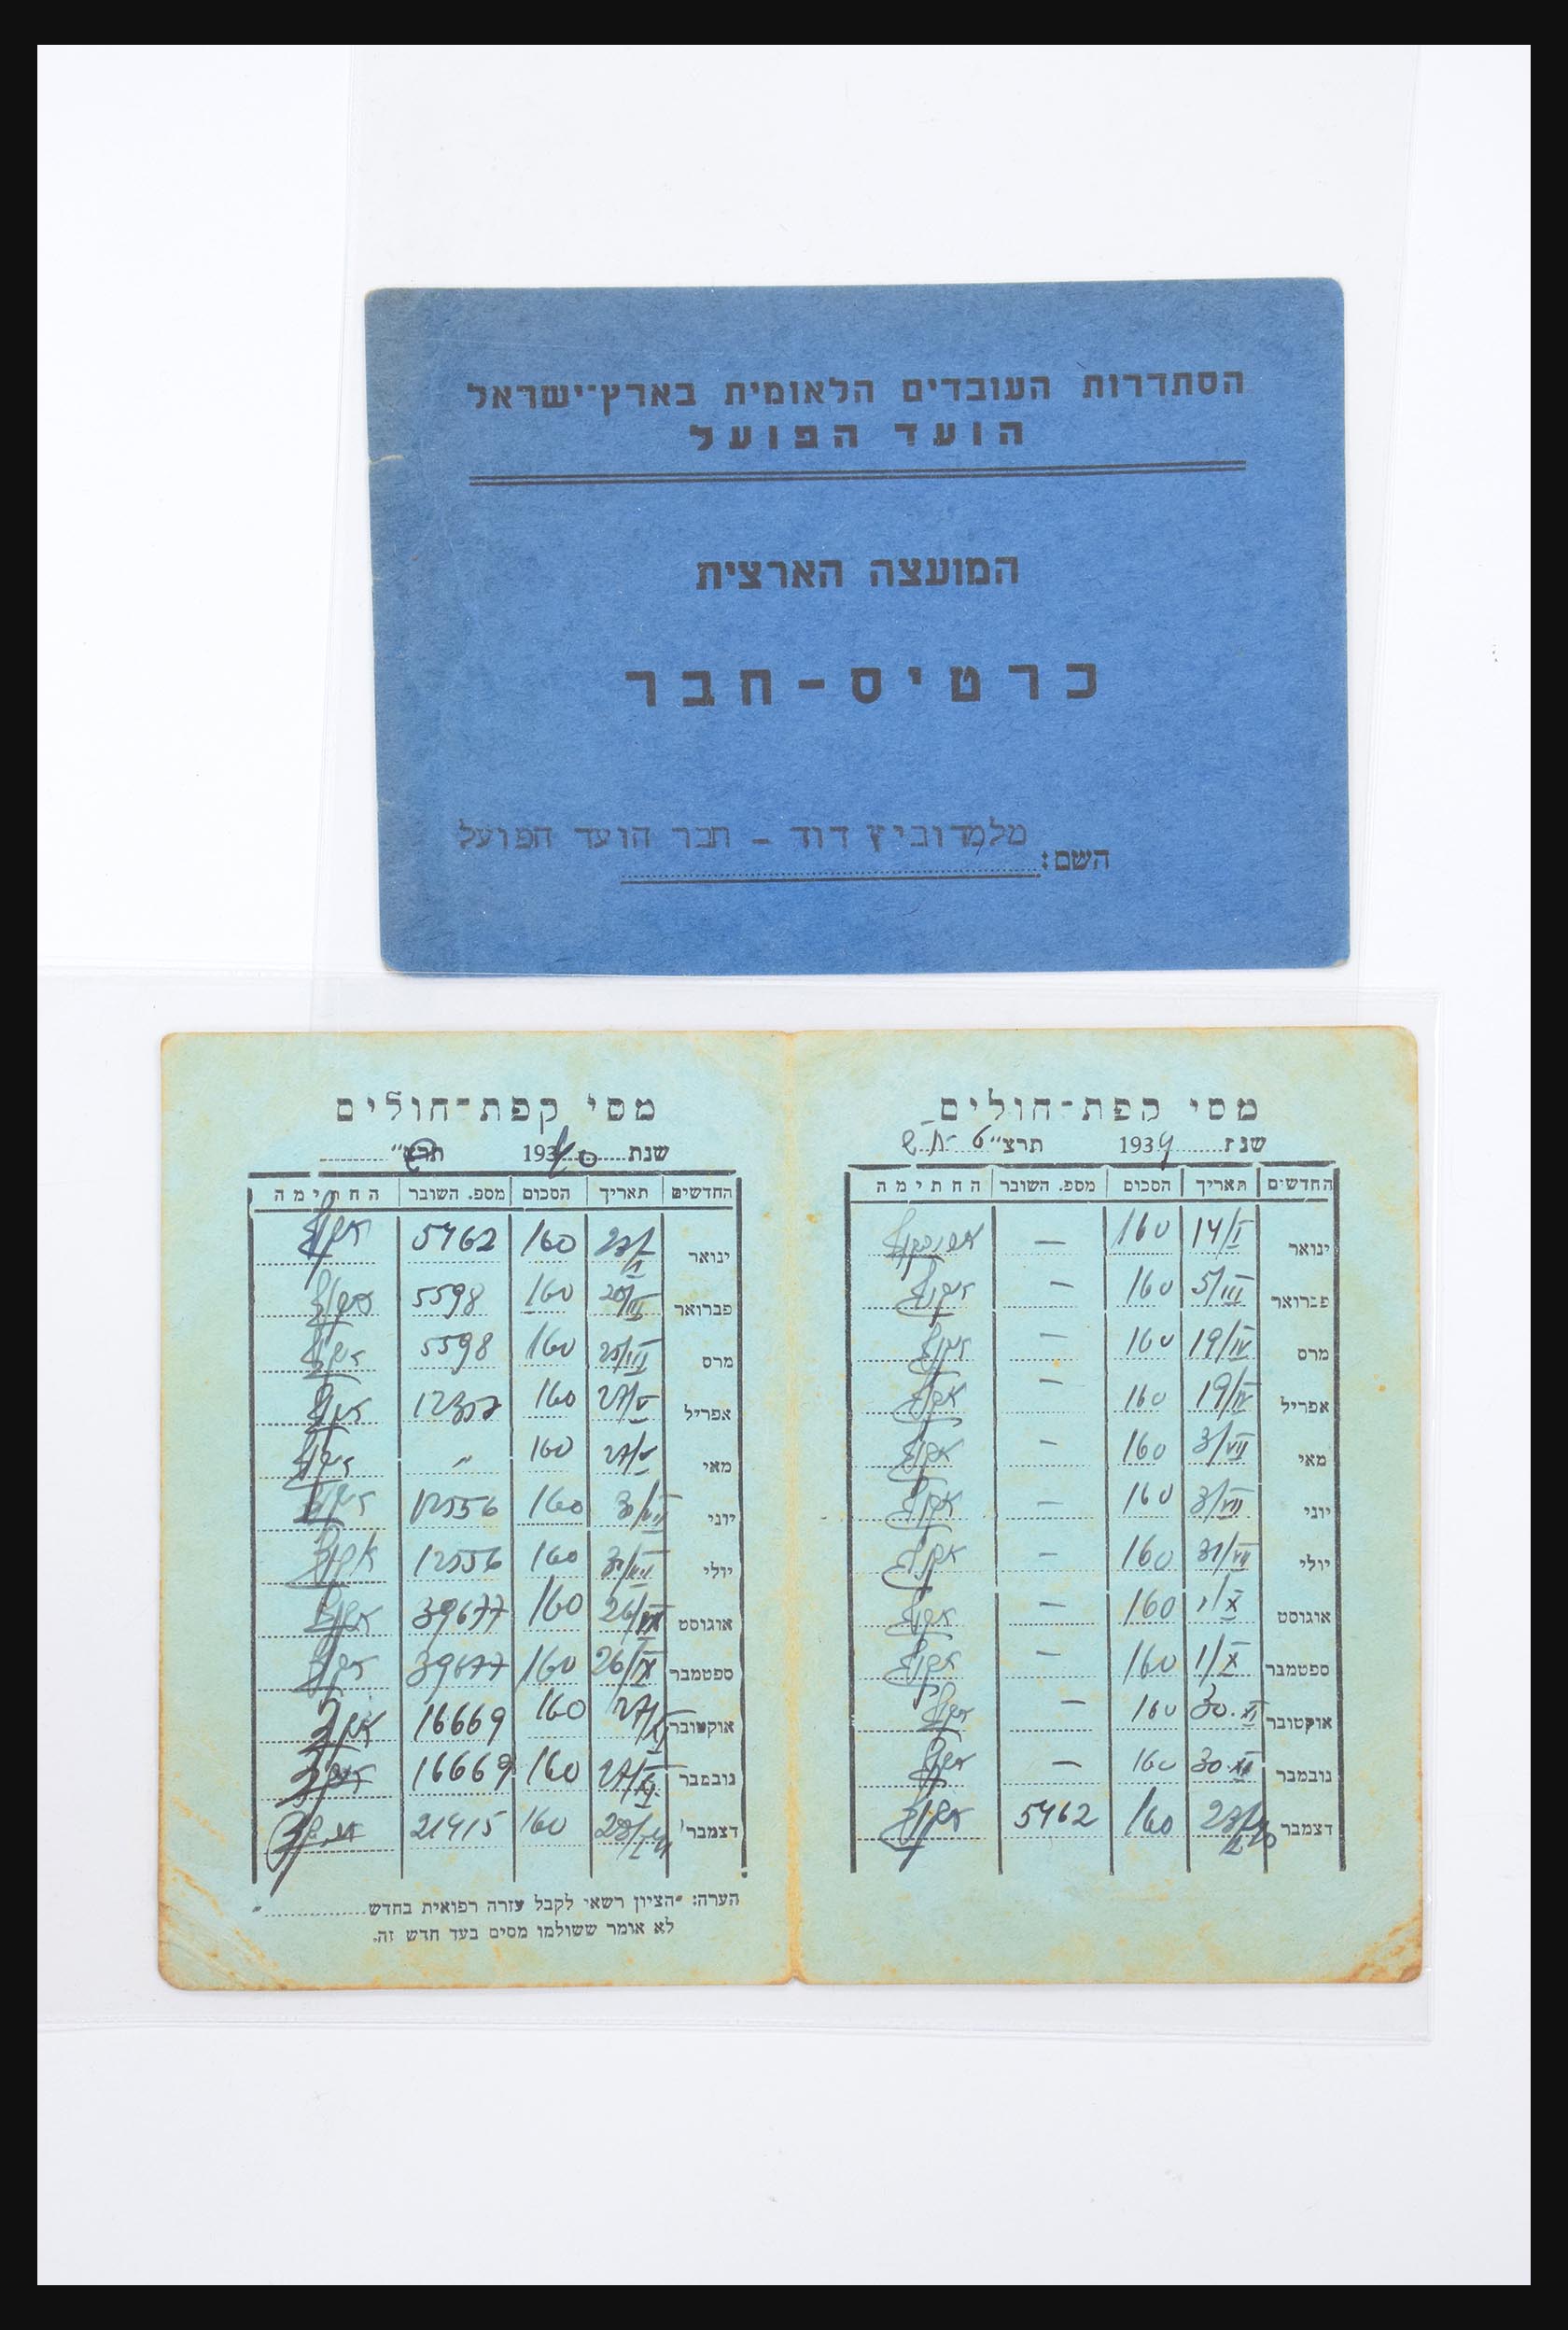 30731 358 - 30731 Israel/Palestina ephemera 1948-1980.